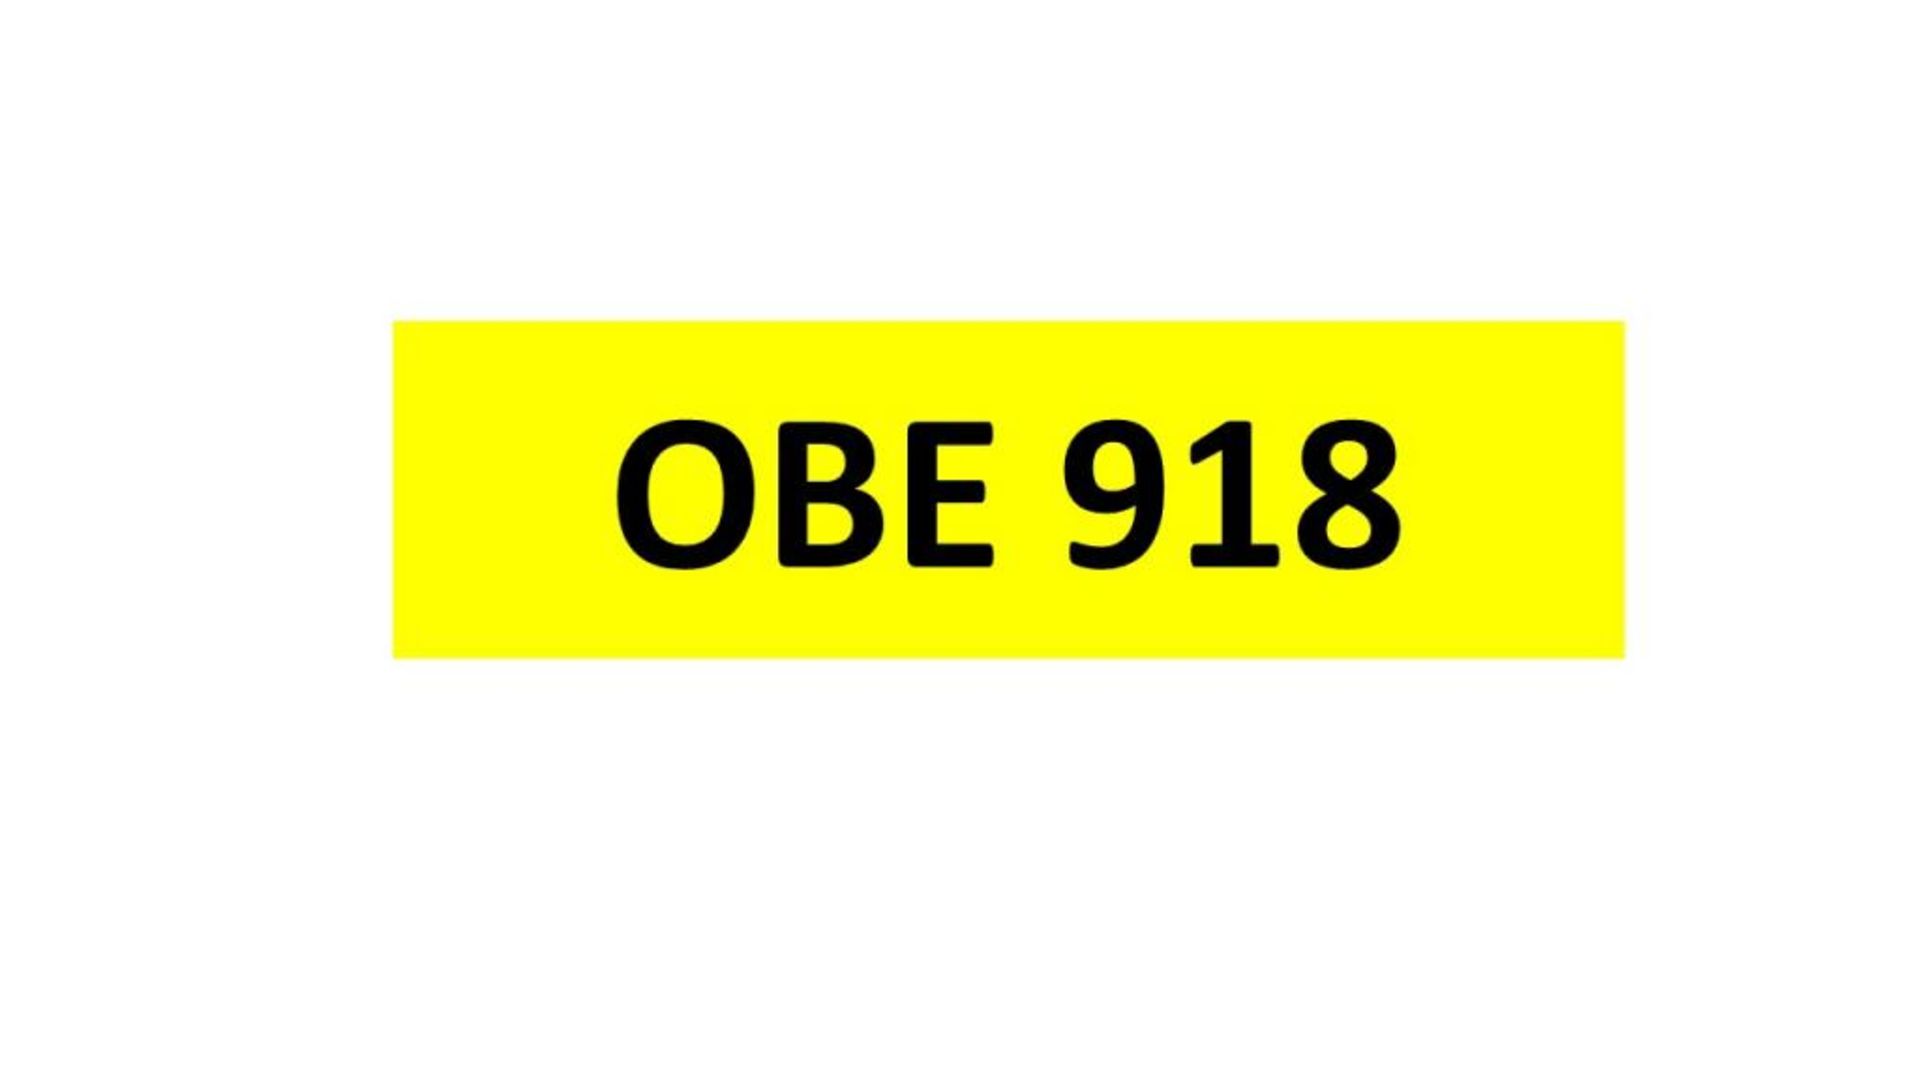 REGISTRATION - OBE 918